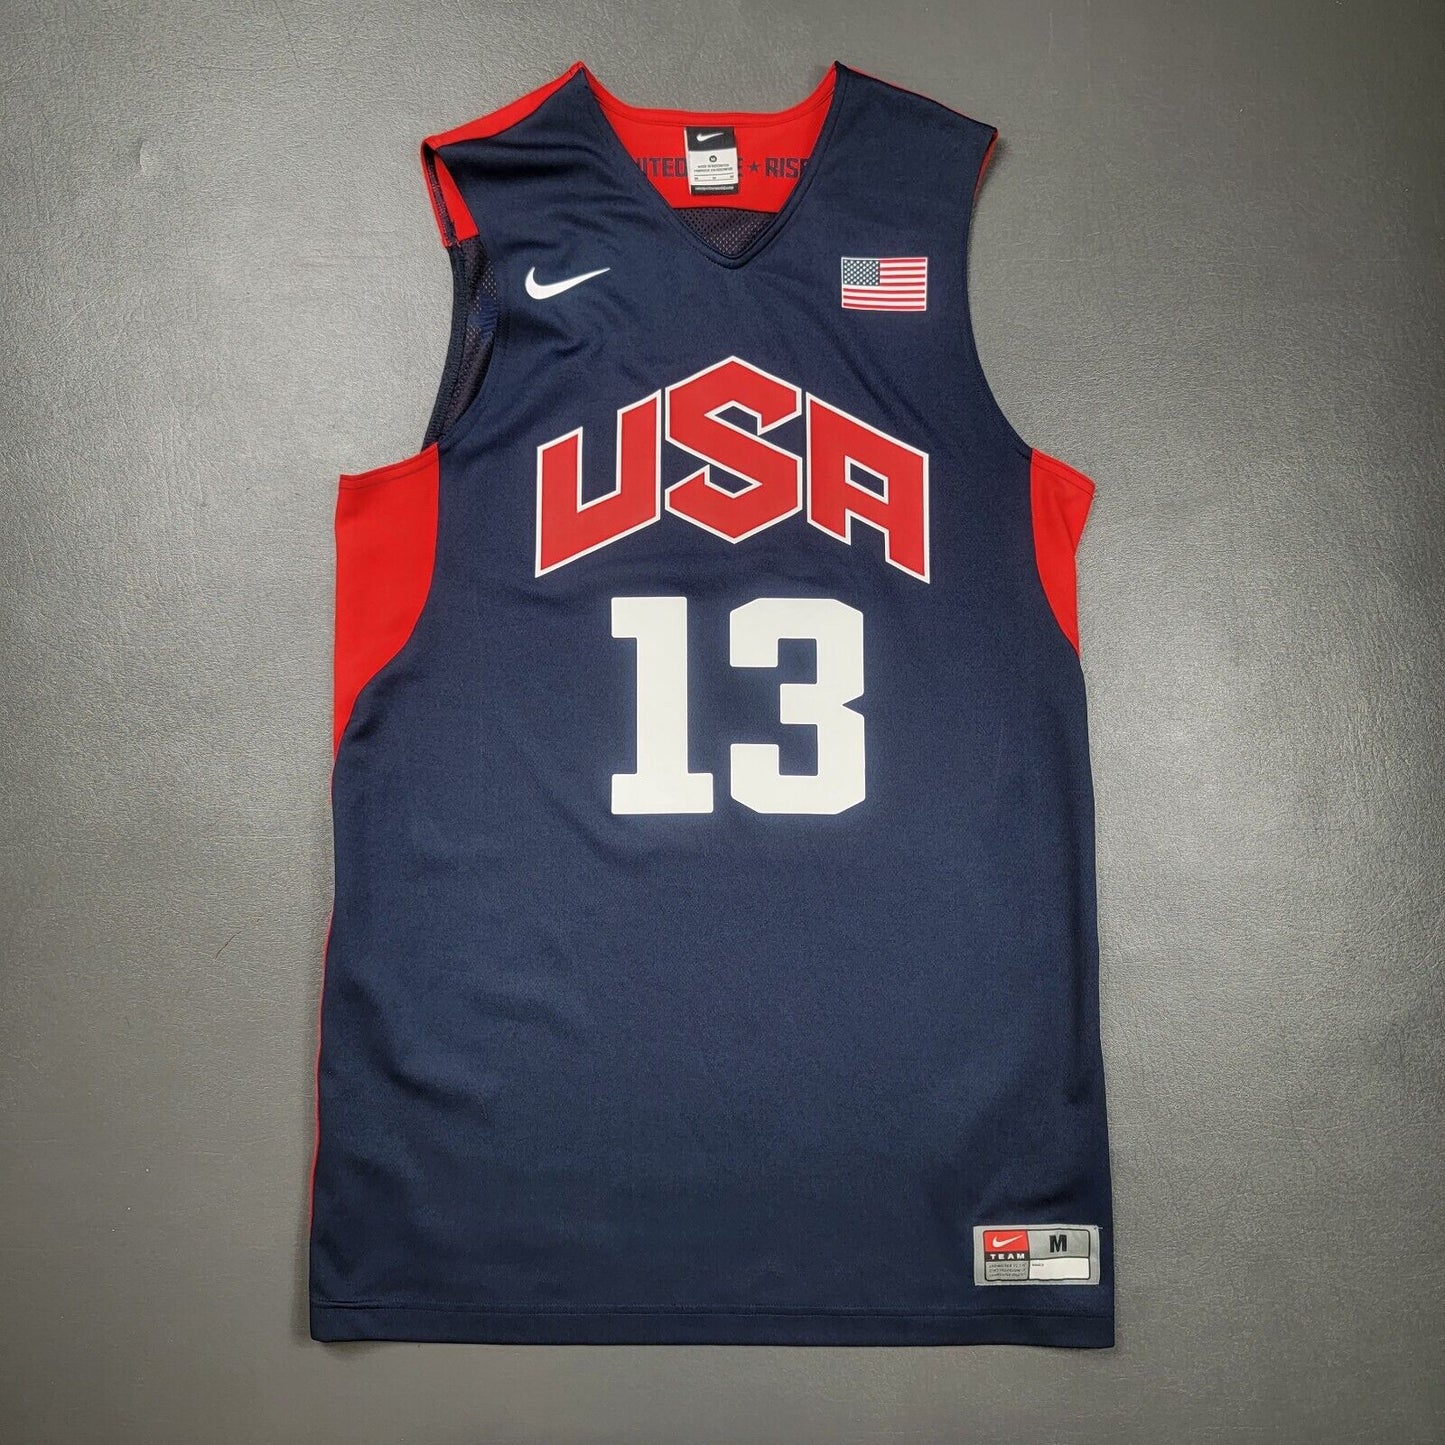 100% Authentic Chris Paul Nike 2012 USA Basketball Jersey Size M Mens